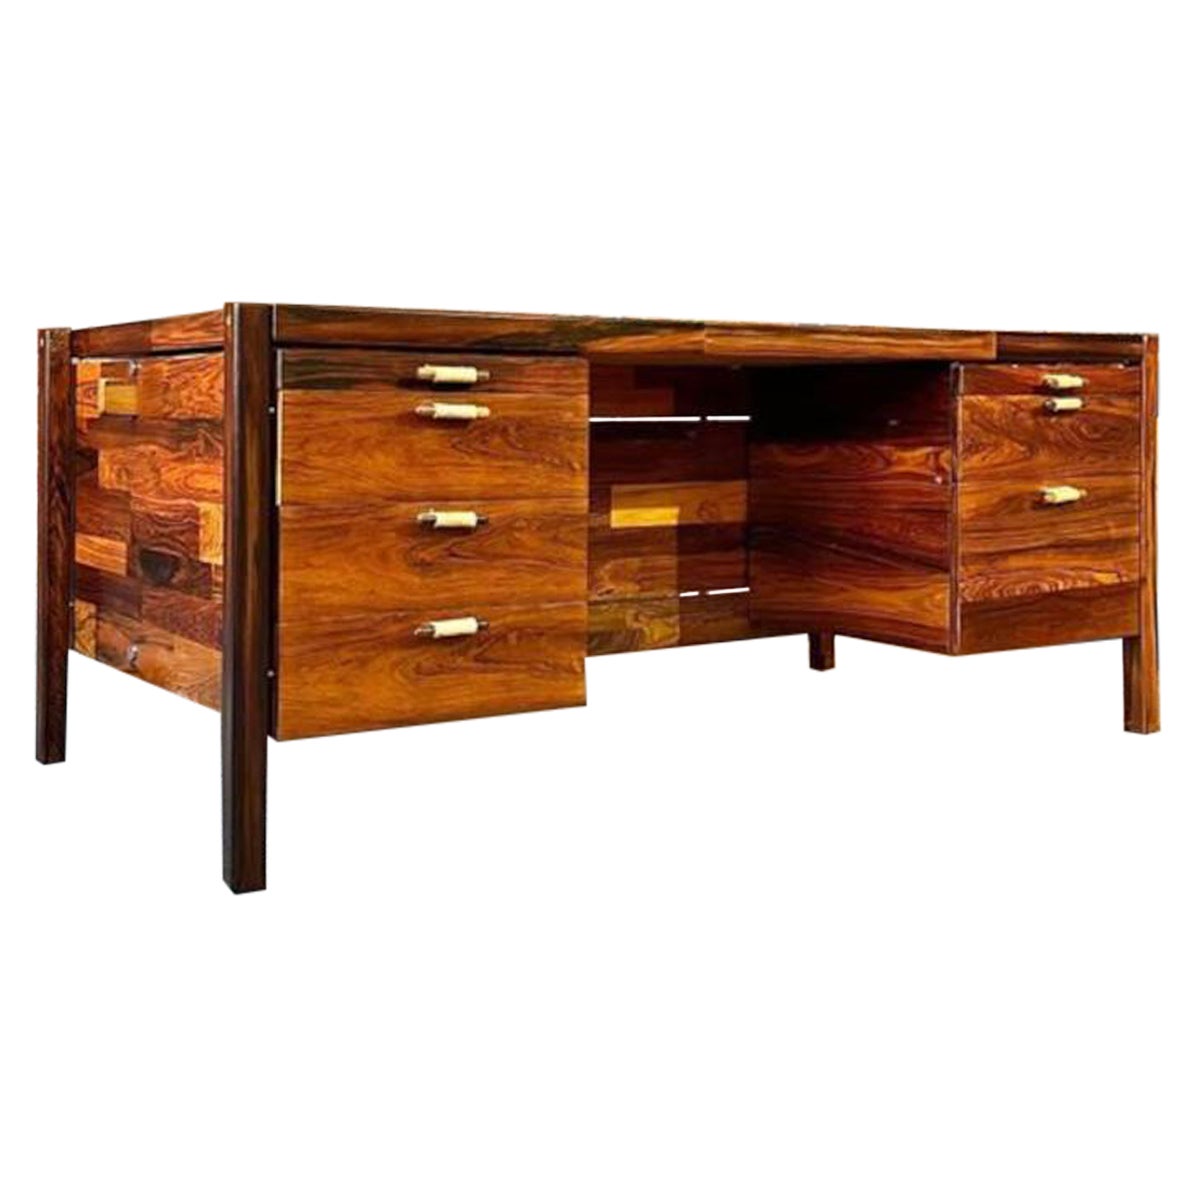 1960's Brazilian Rosewood Desk by Jorge Zalszupin for L'atelier For Sale